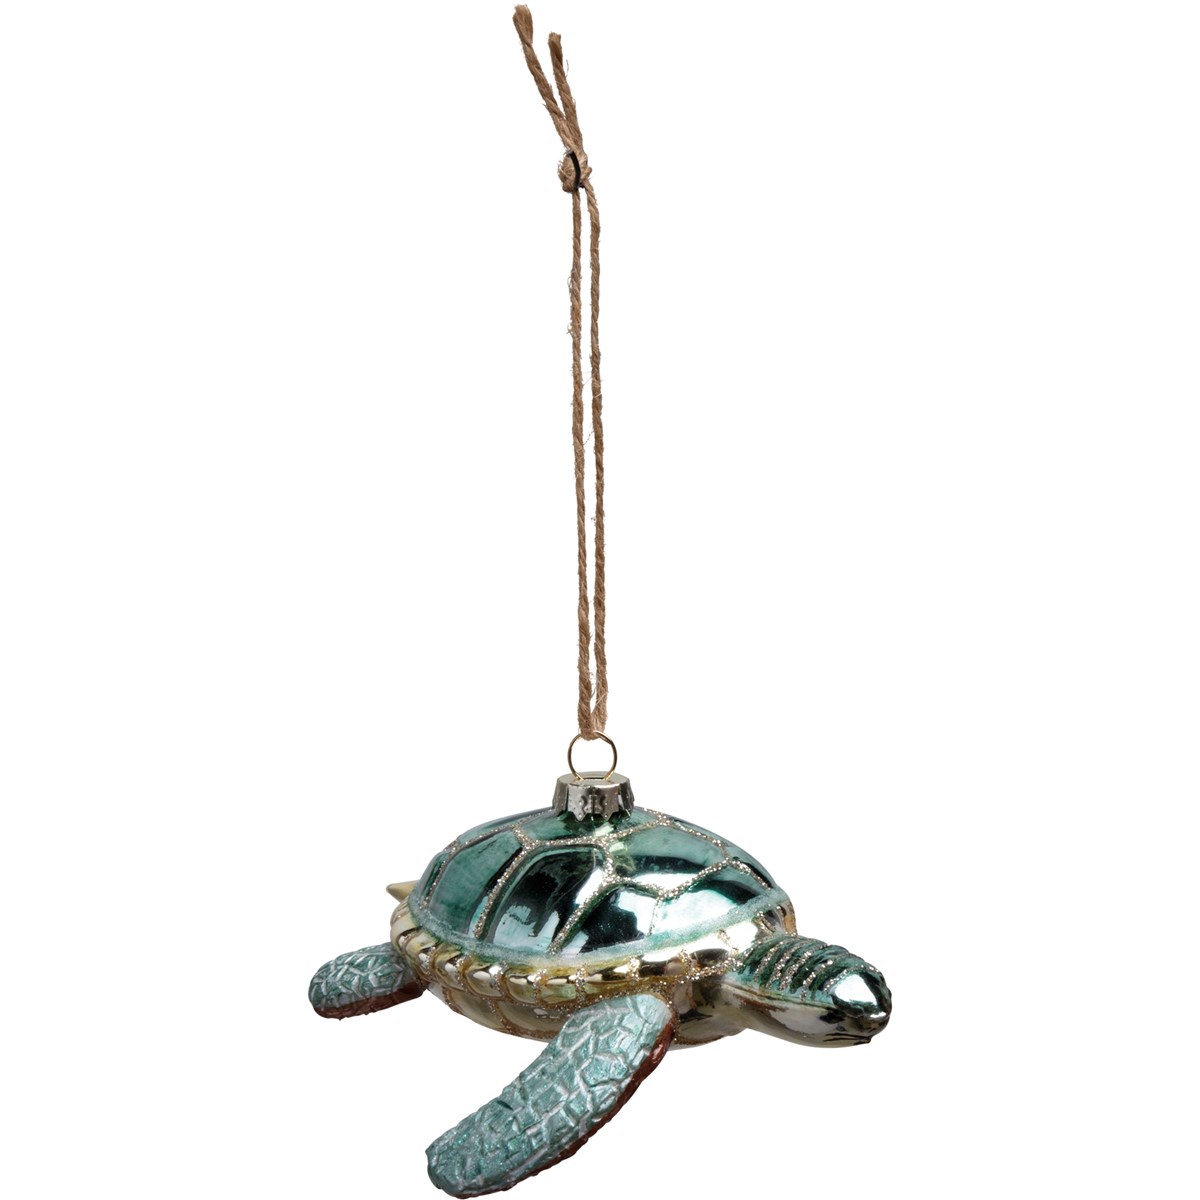 Glass Sea Turtle Ornament - Glass, Metal, String, Glitter